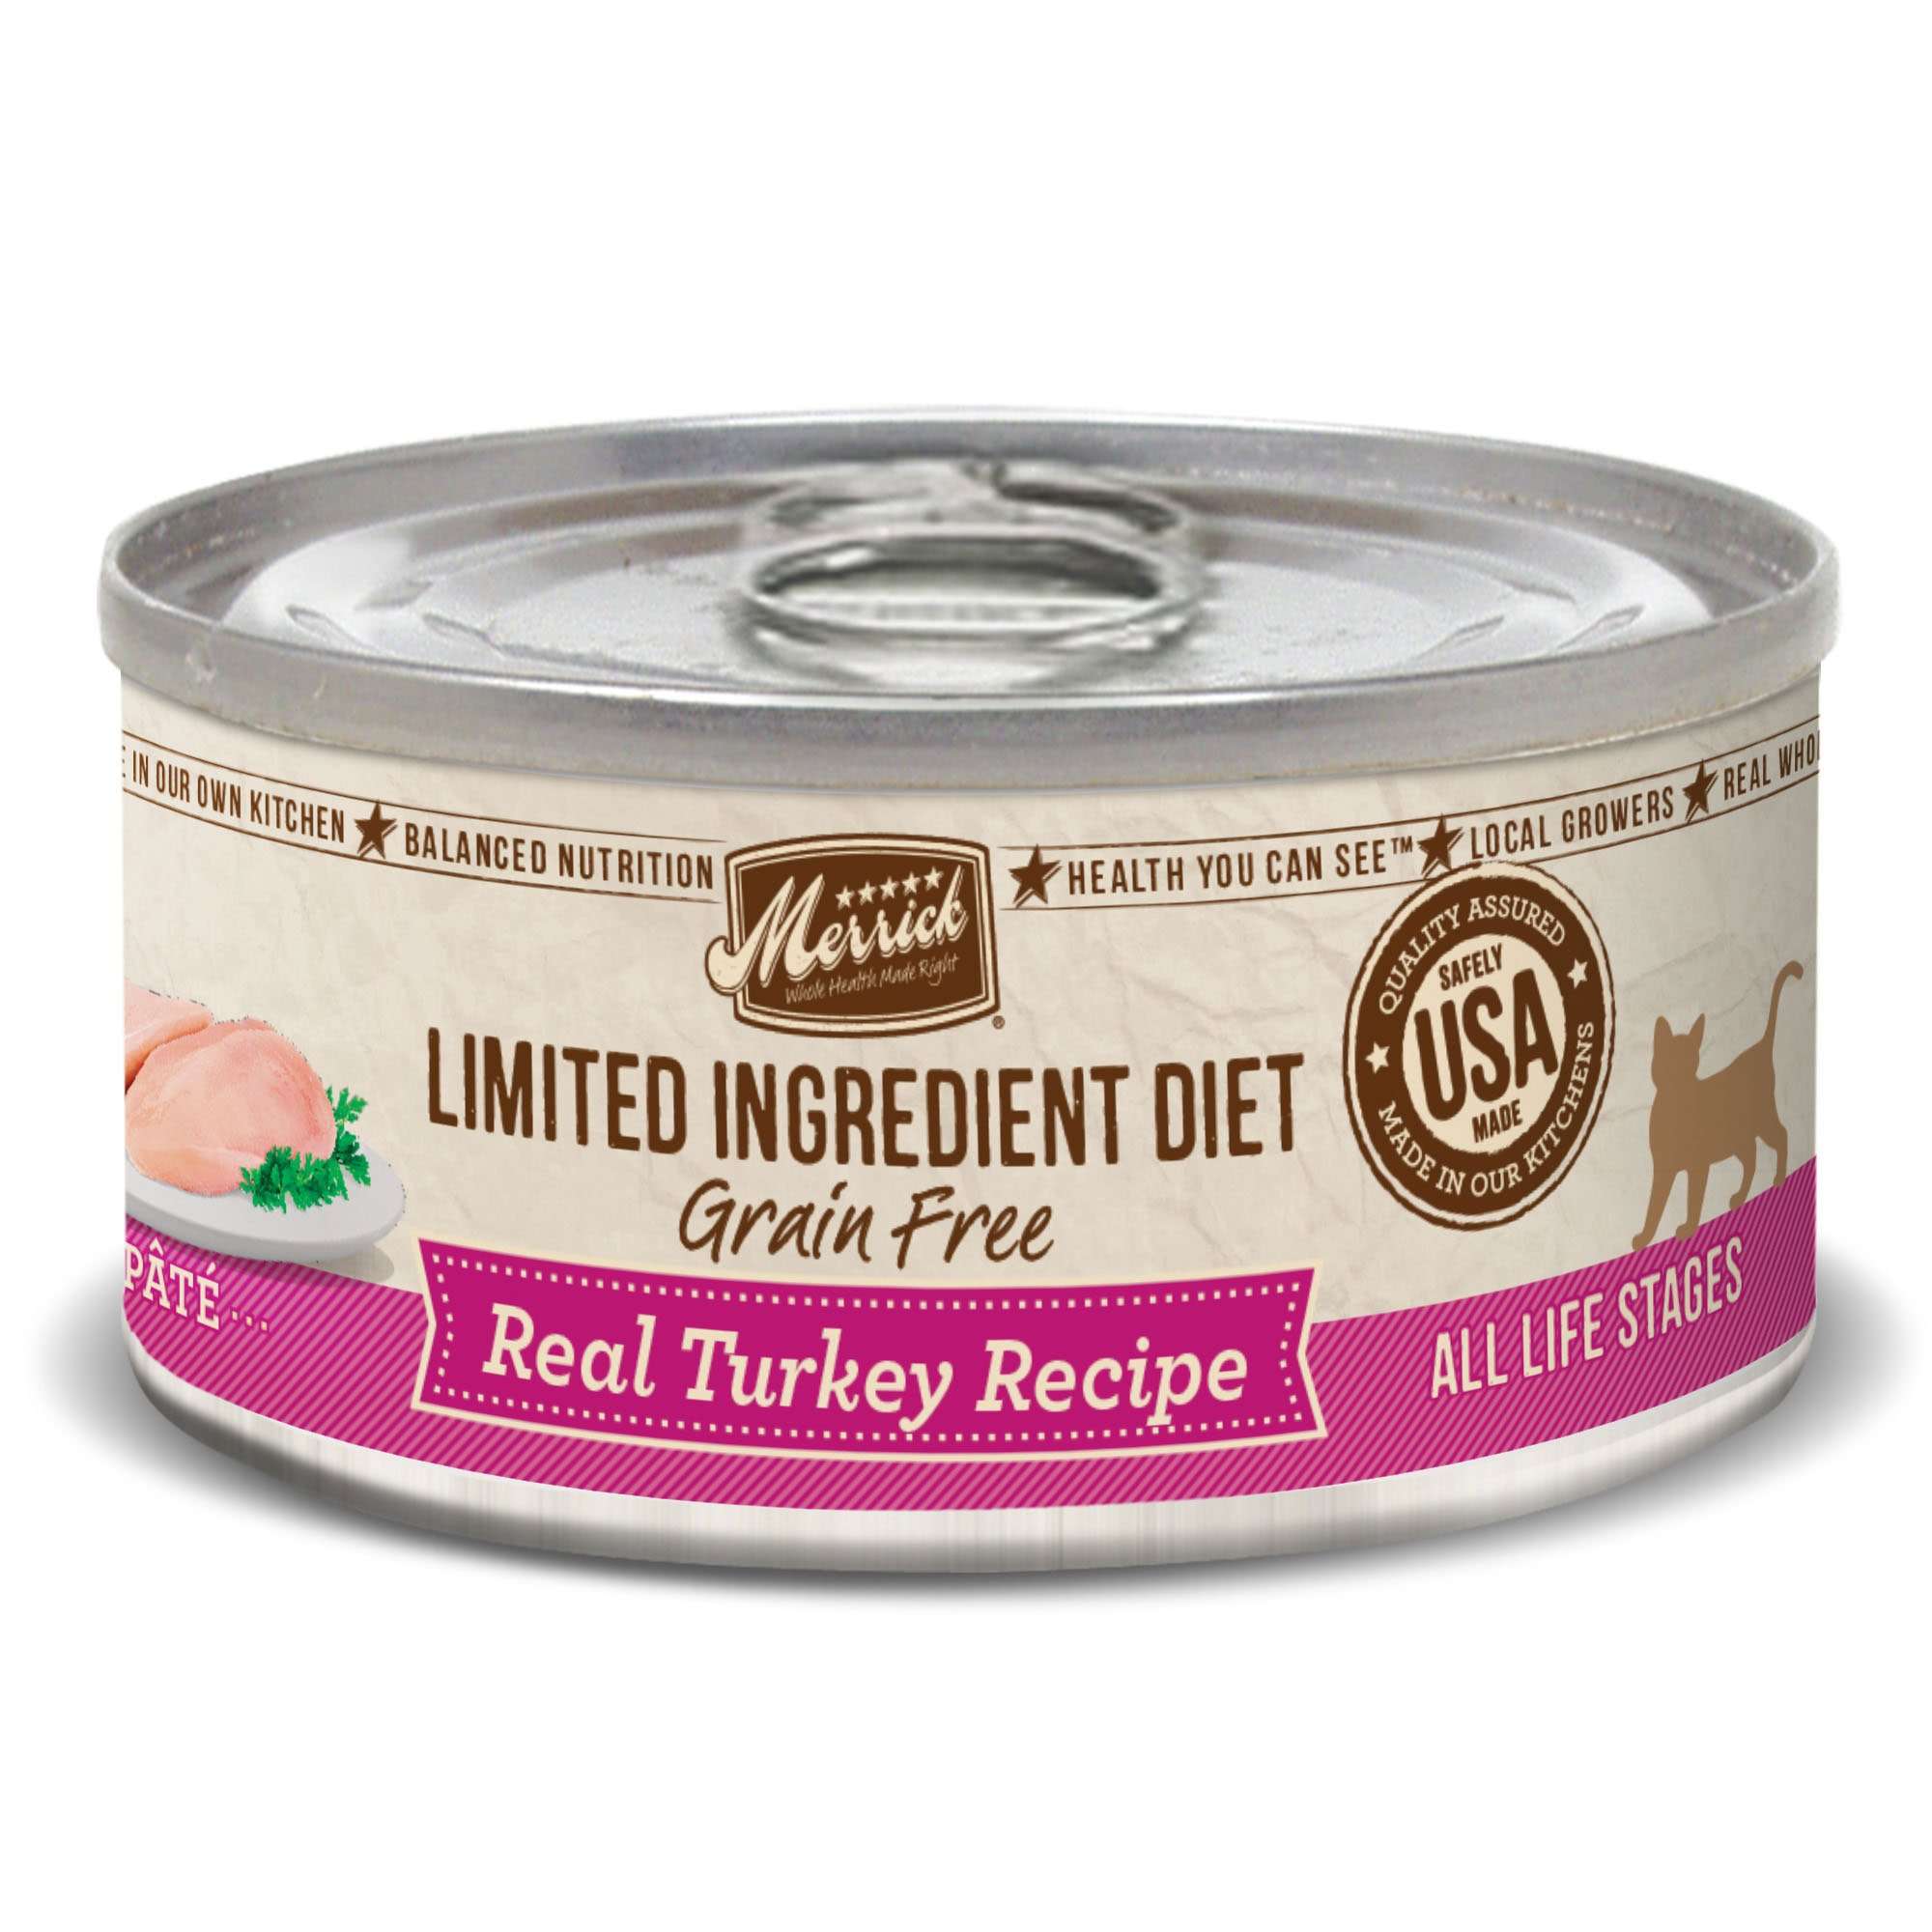 Merrick Limited Ingredient Diet Grain Free Turkey Canned Cat Food